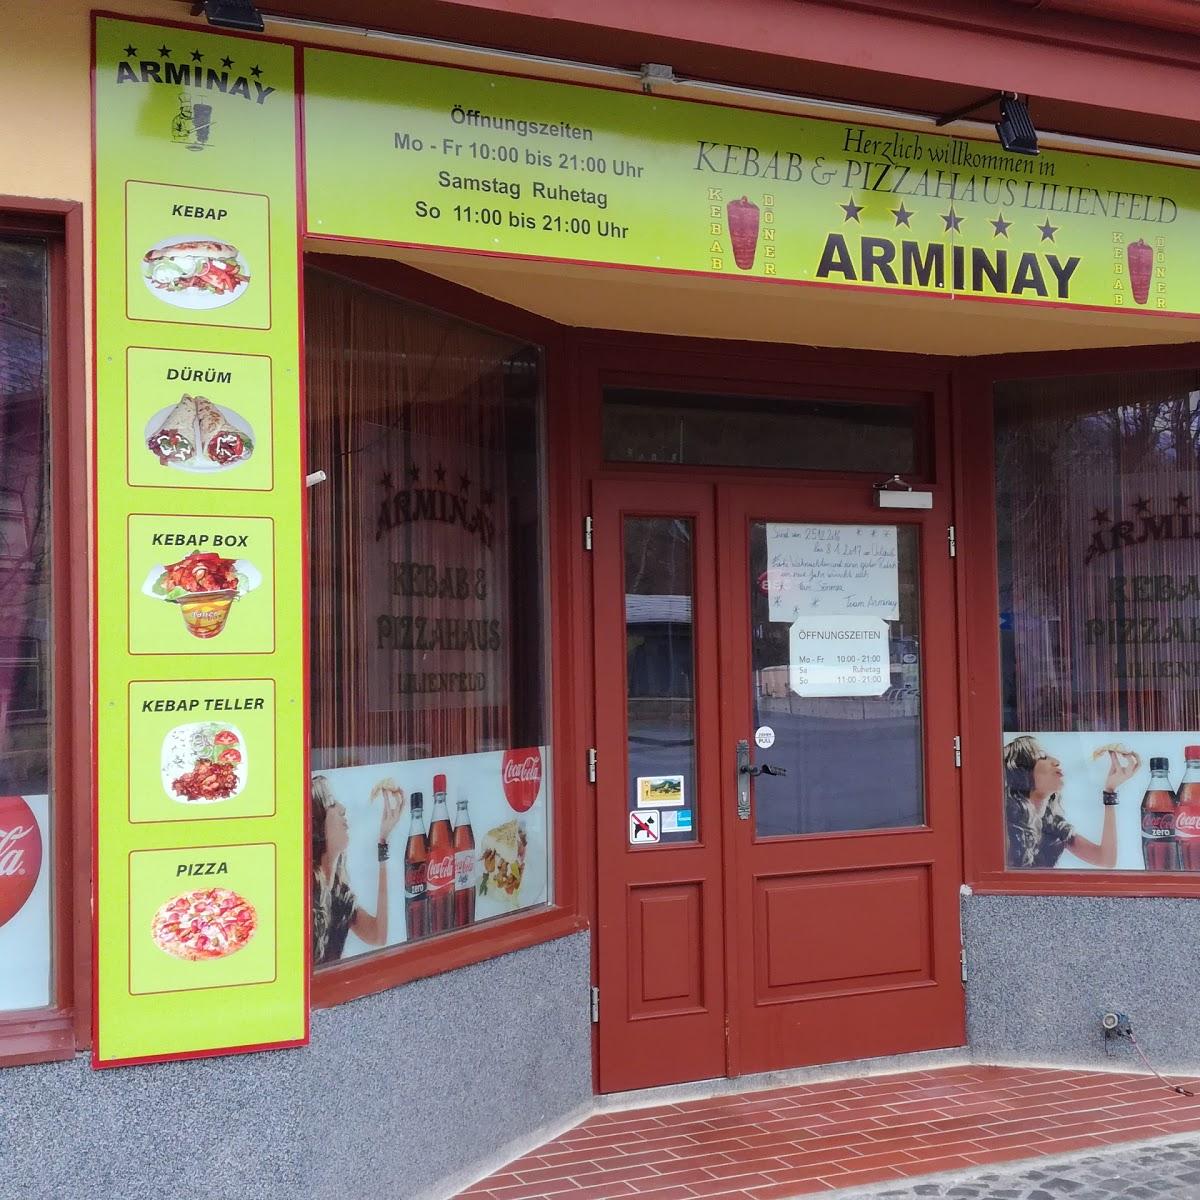 Restaurant "Arminay Kebab & Pizzahaus" in Lilienfeld